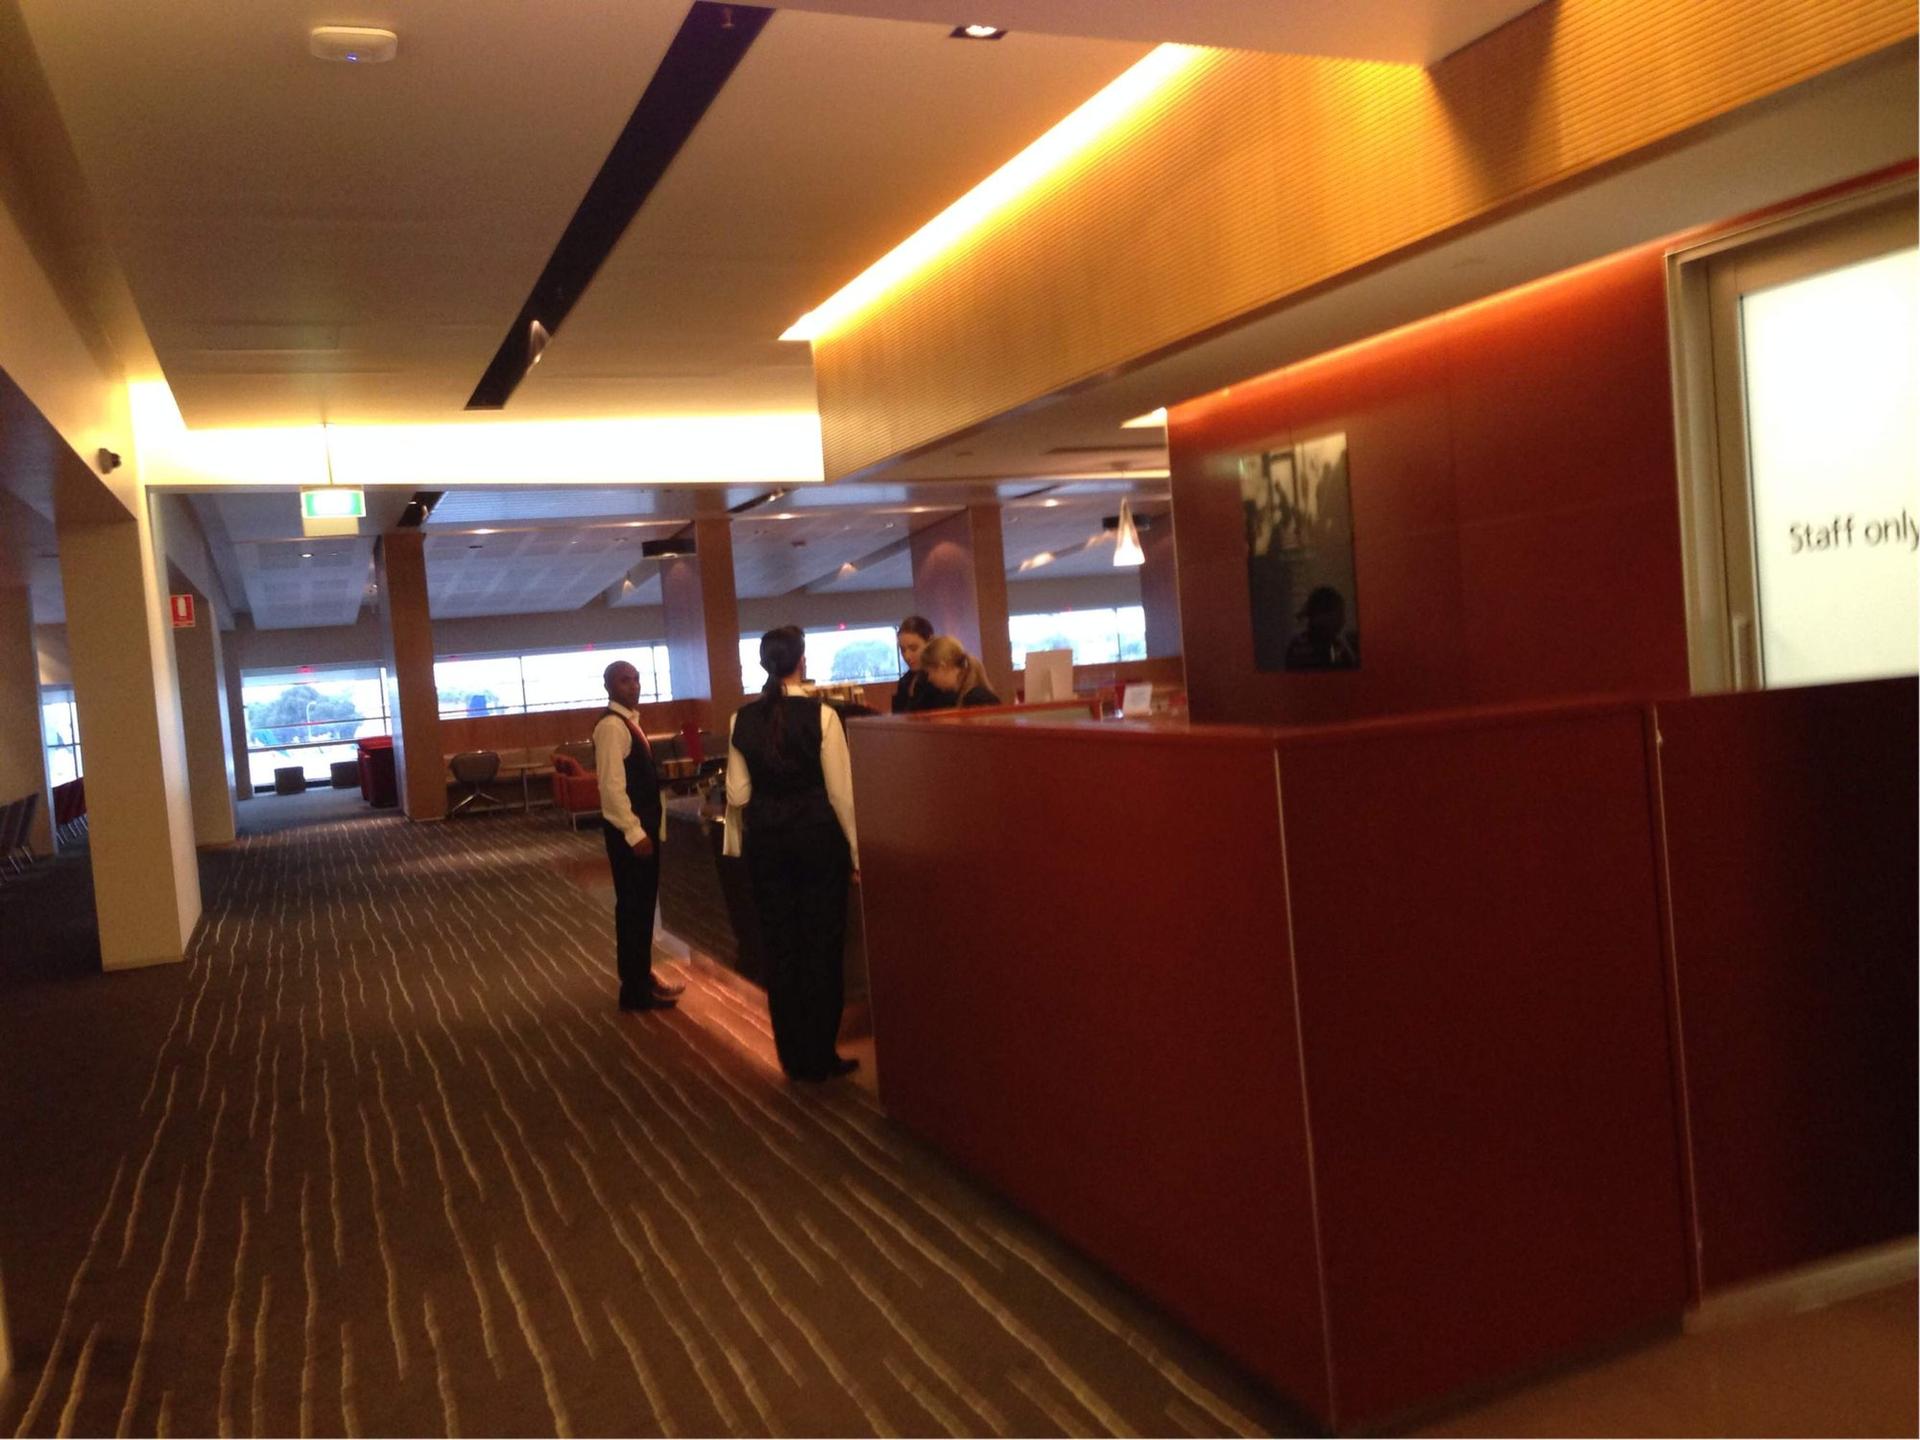 Qantas Club (International Business Lounge) image 3 of 6